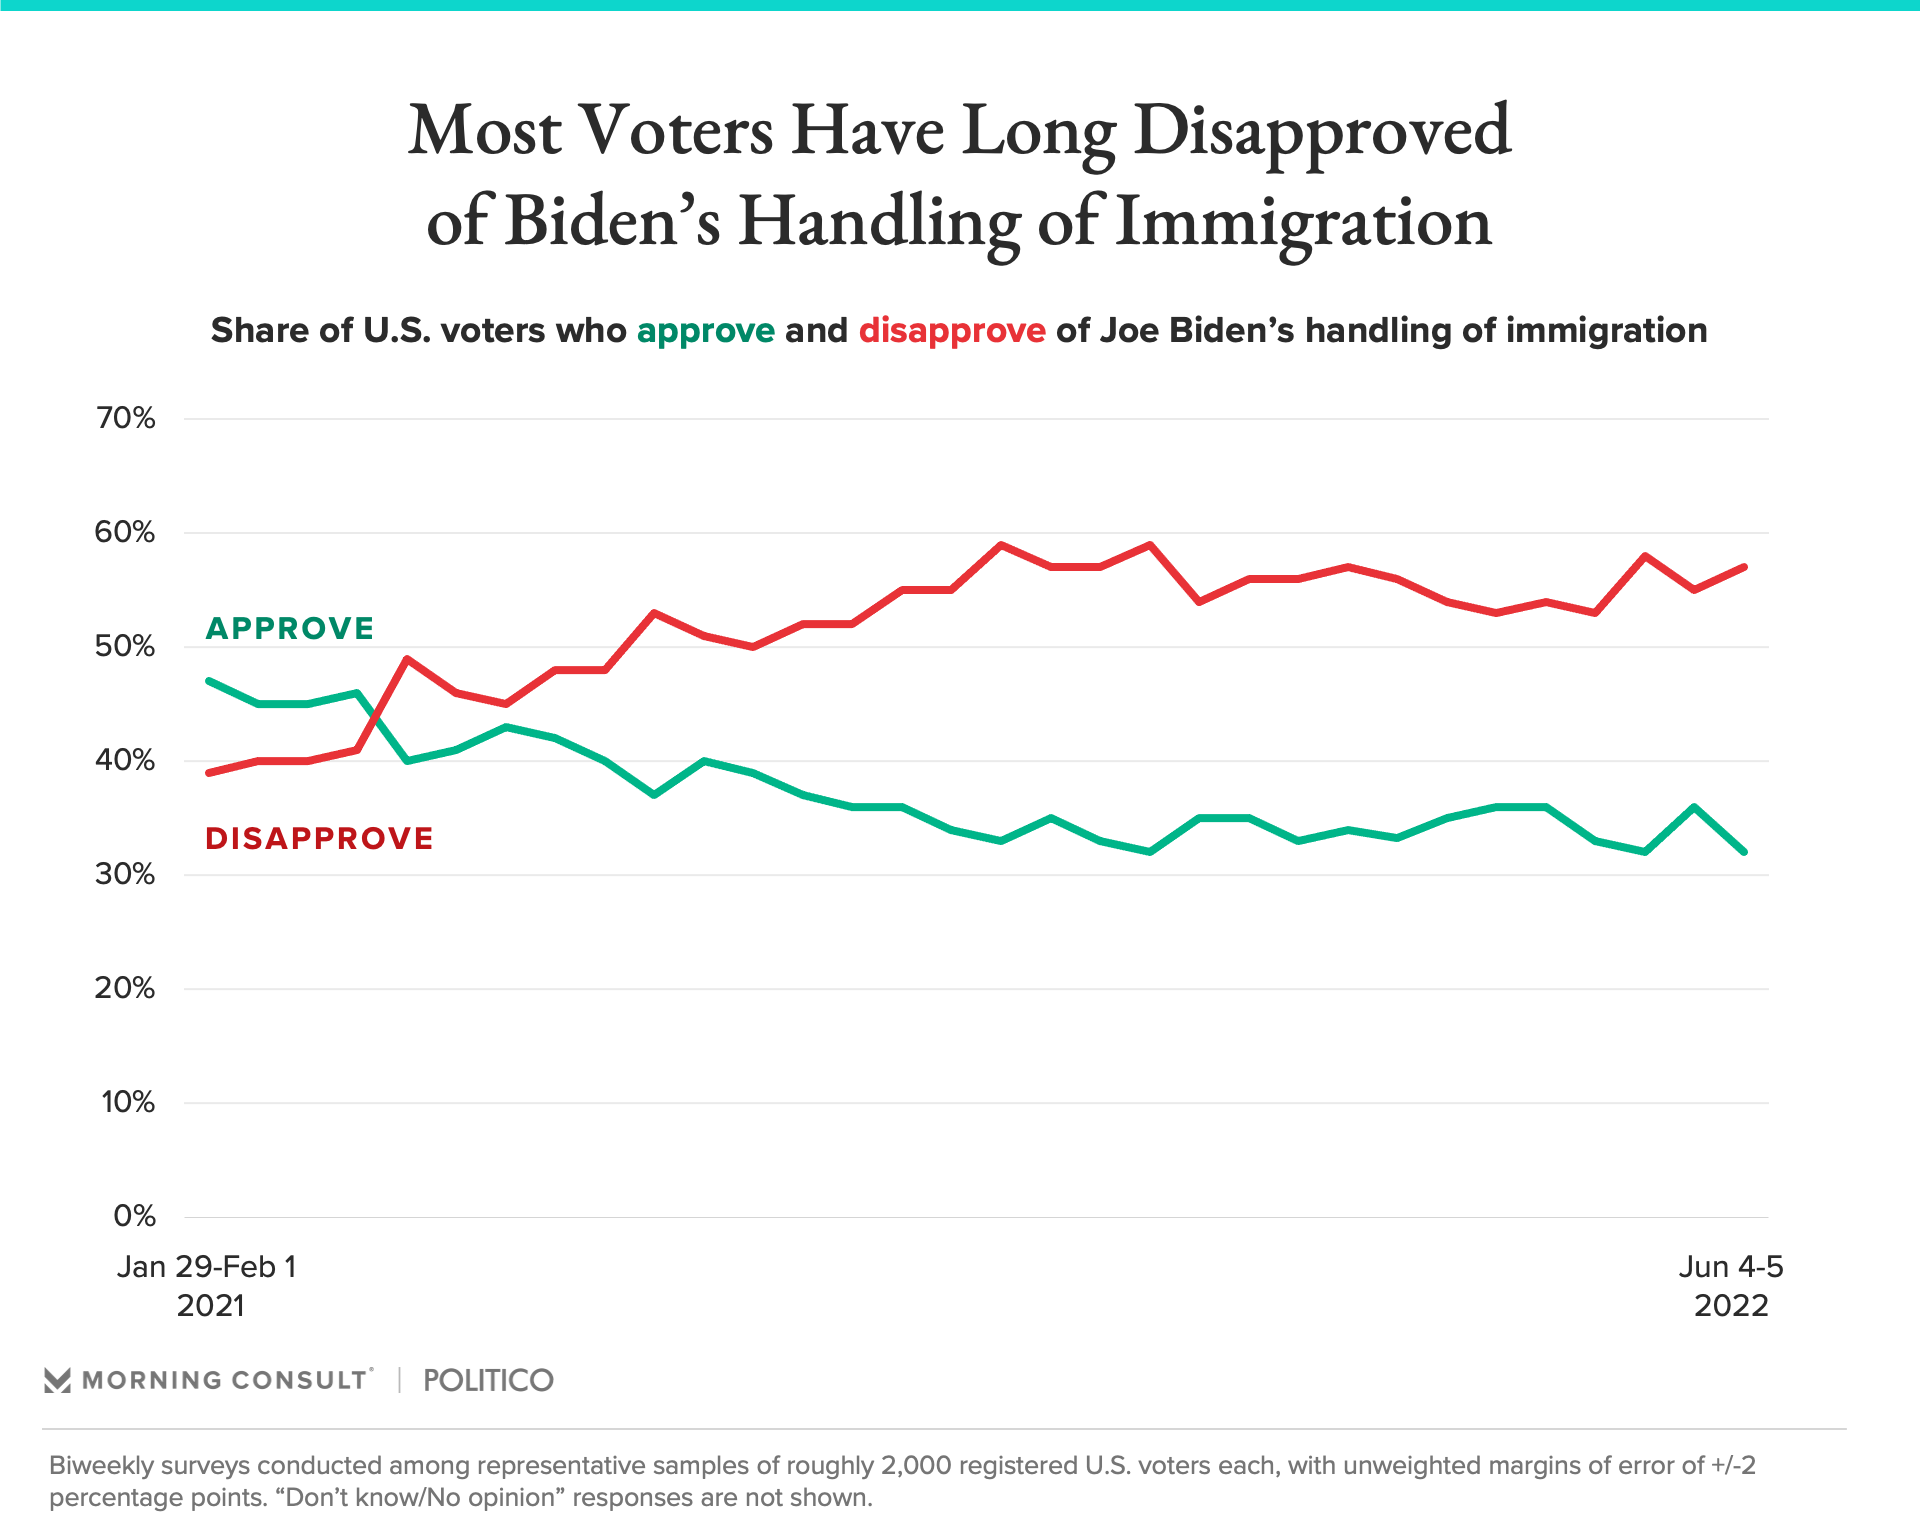 Biden's handling of immigration poll